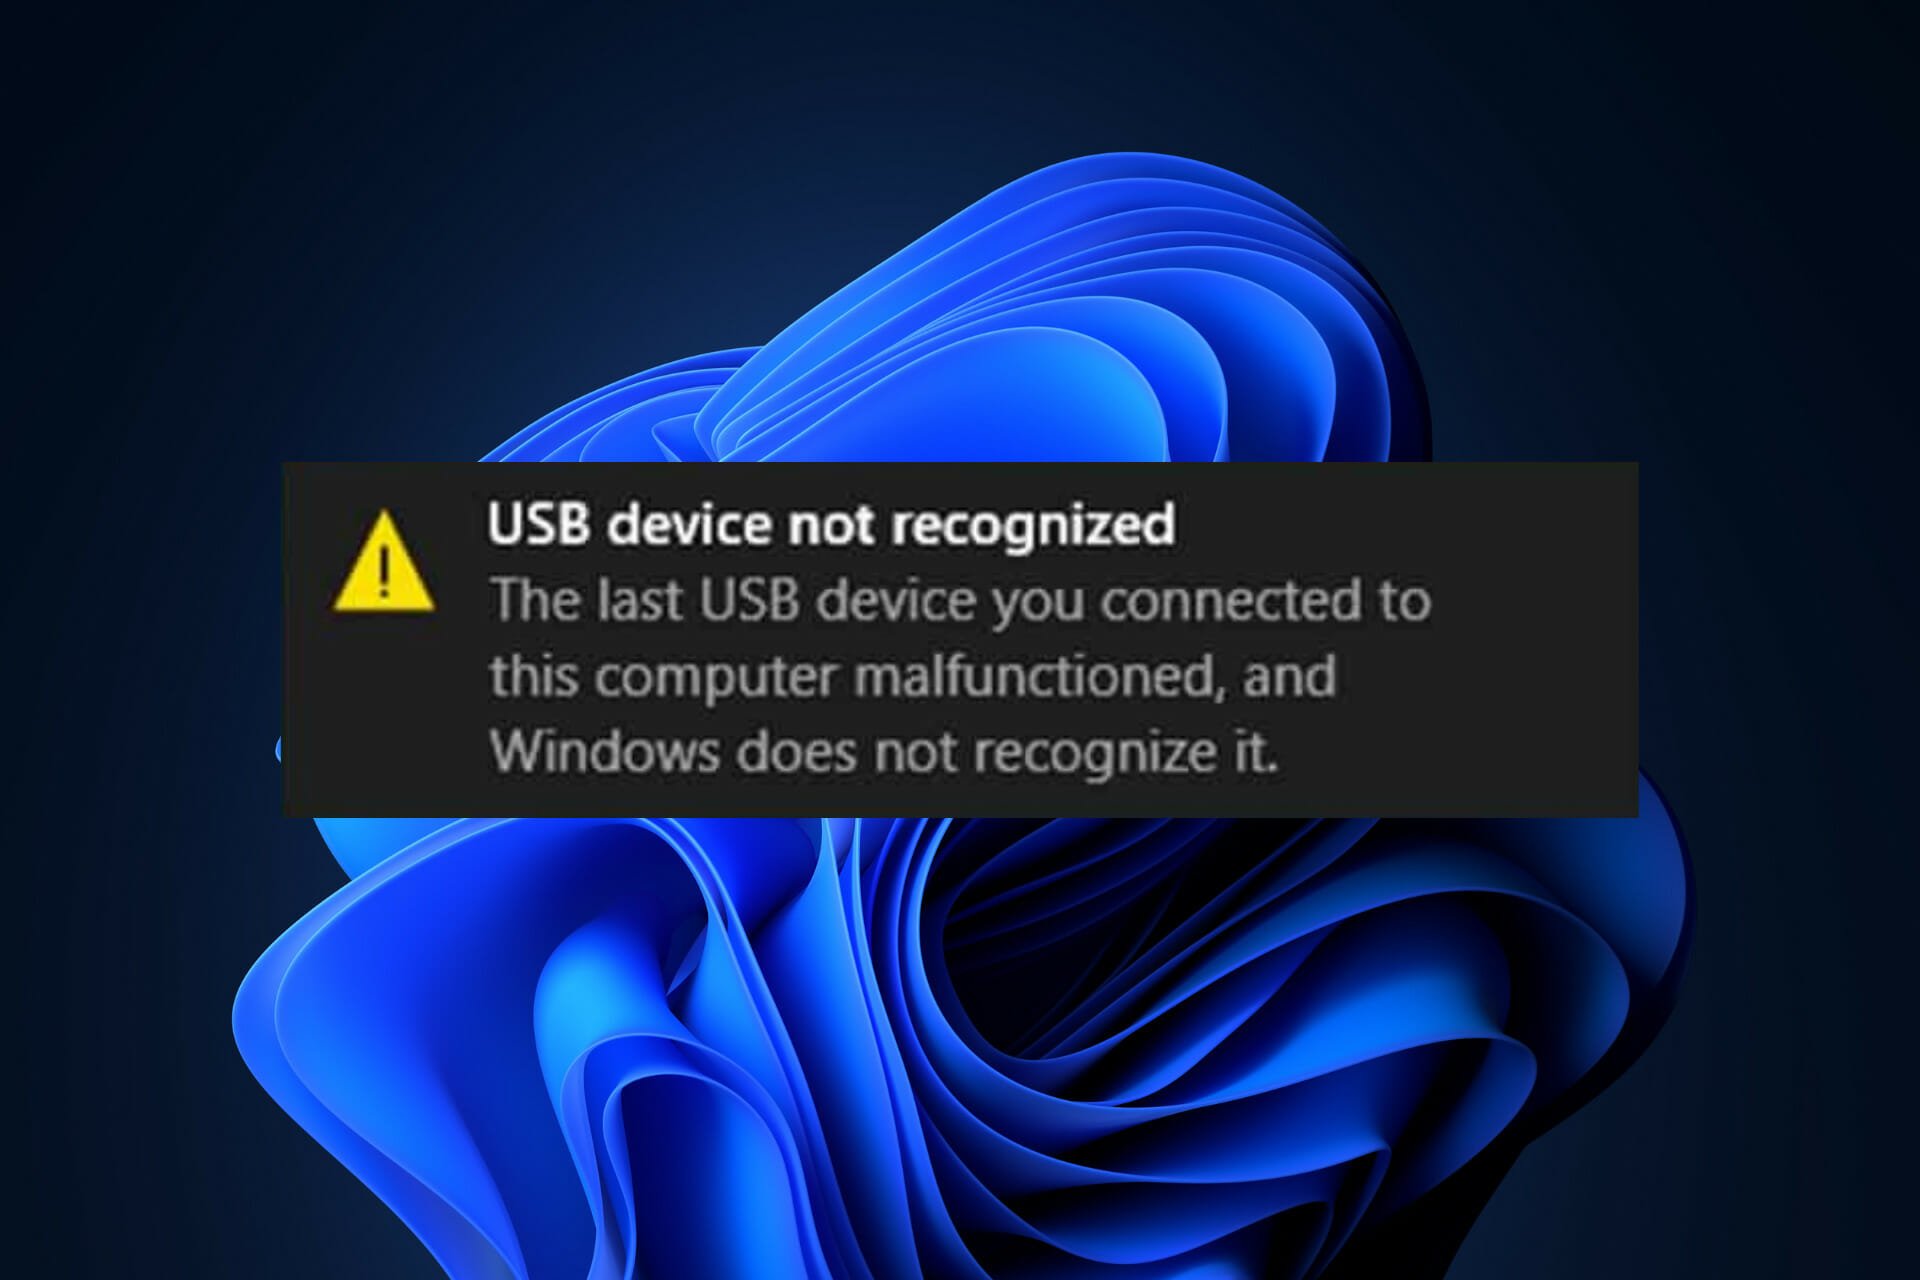 garmin-not-recog garmin usb device not recognized windows 11